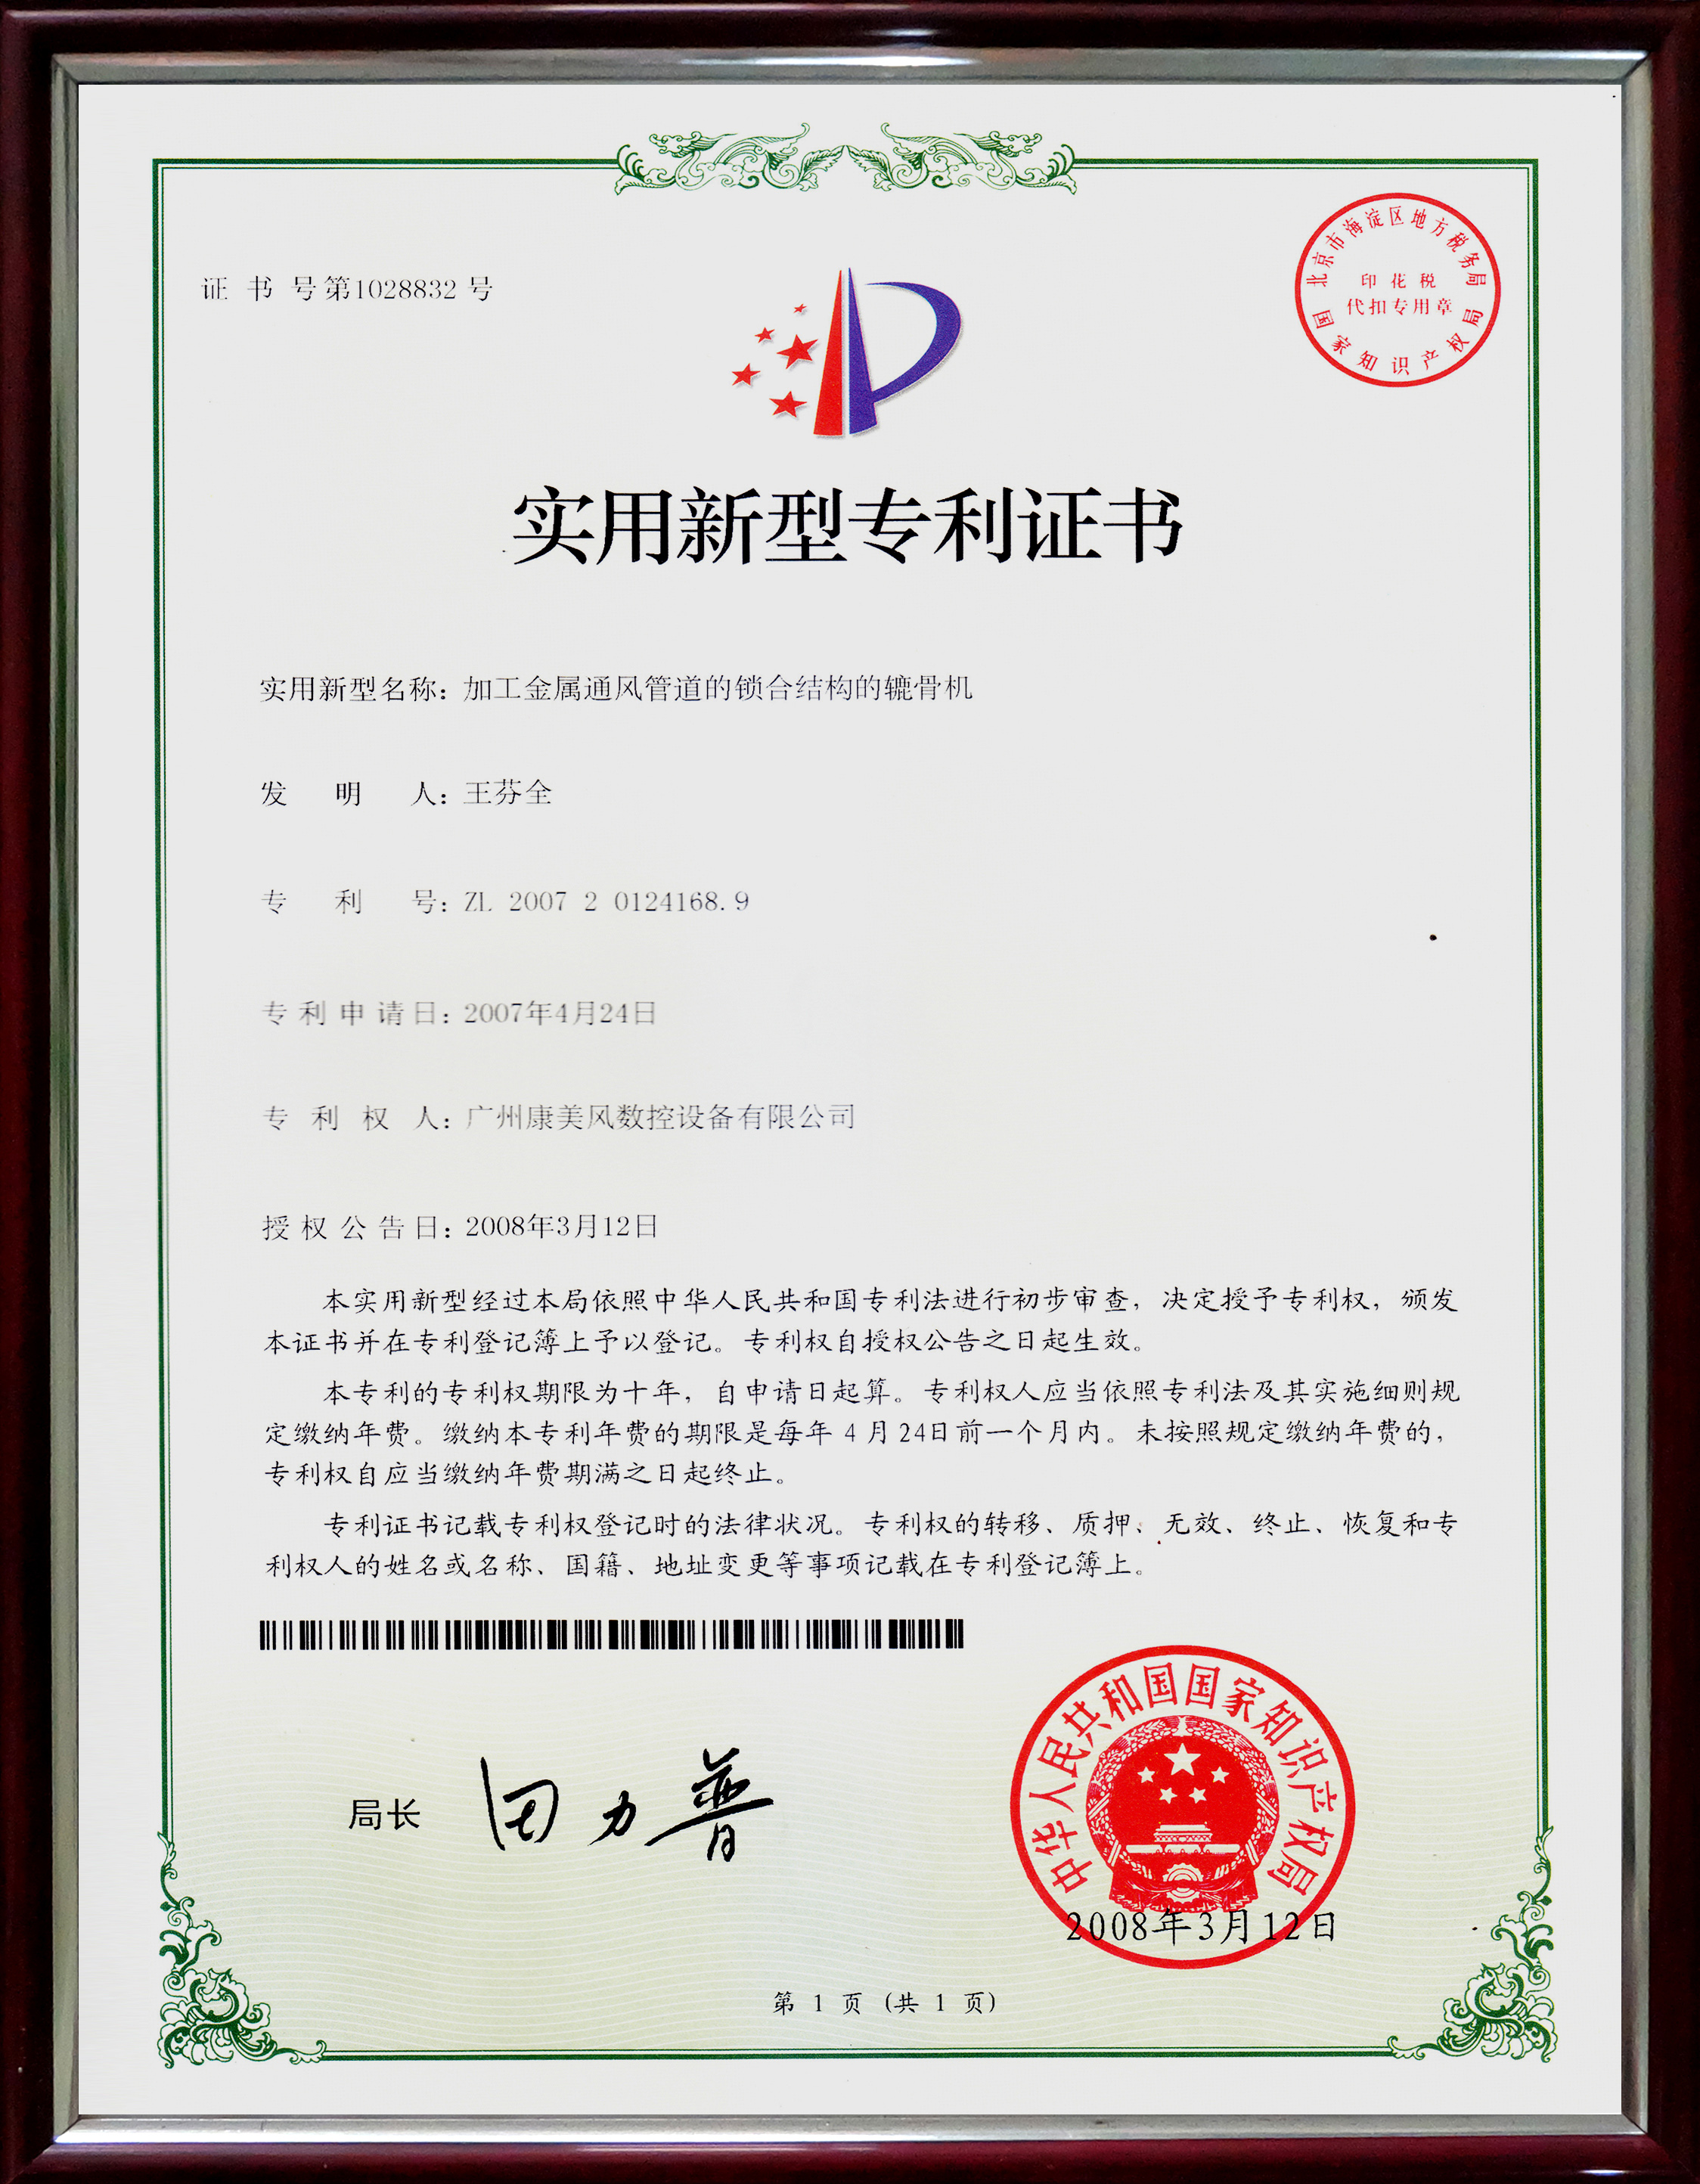 Lock former patent certificate